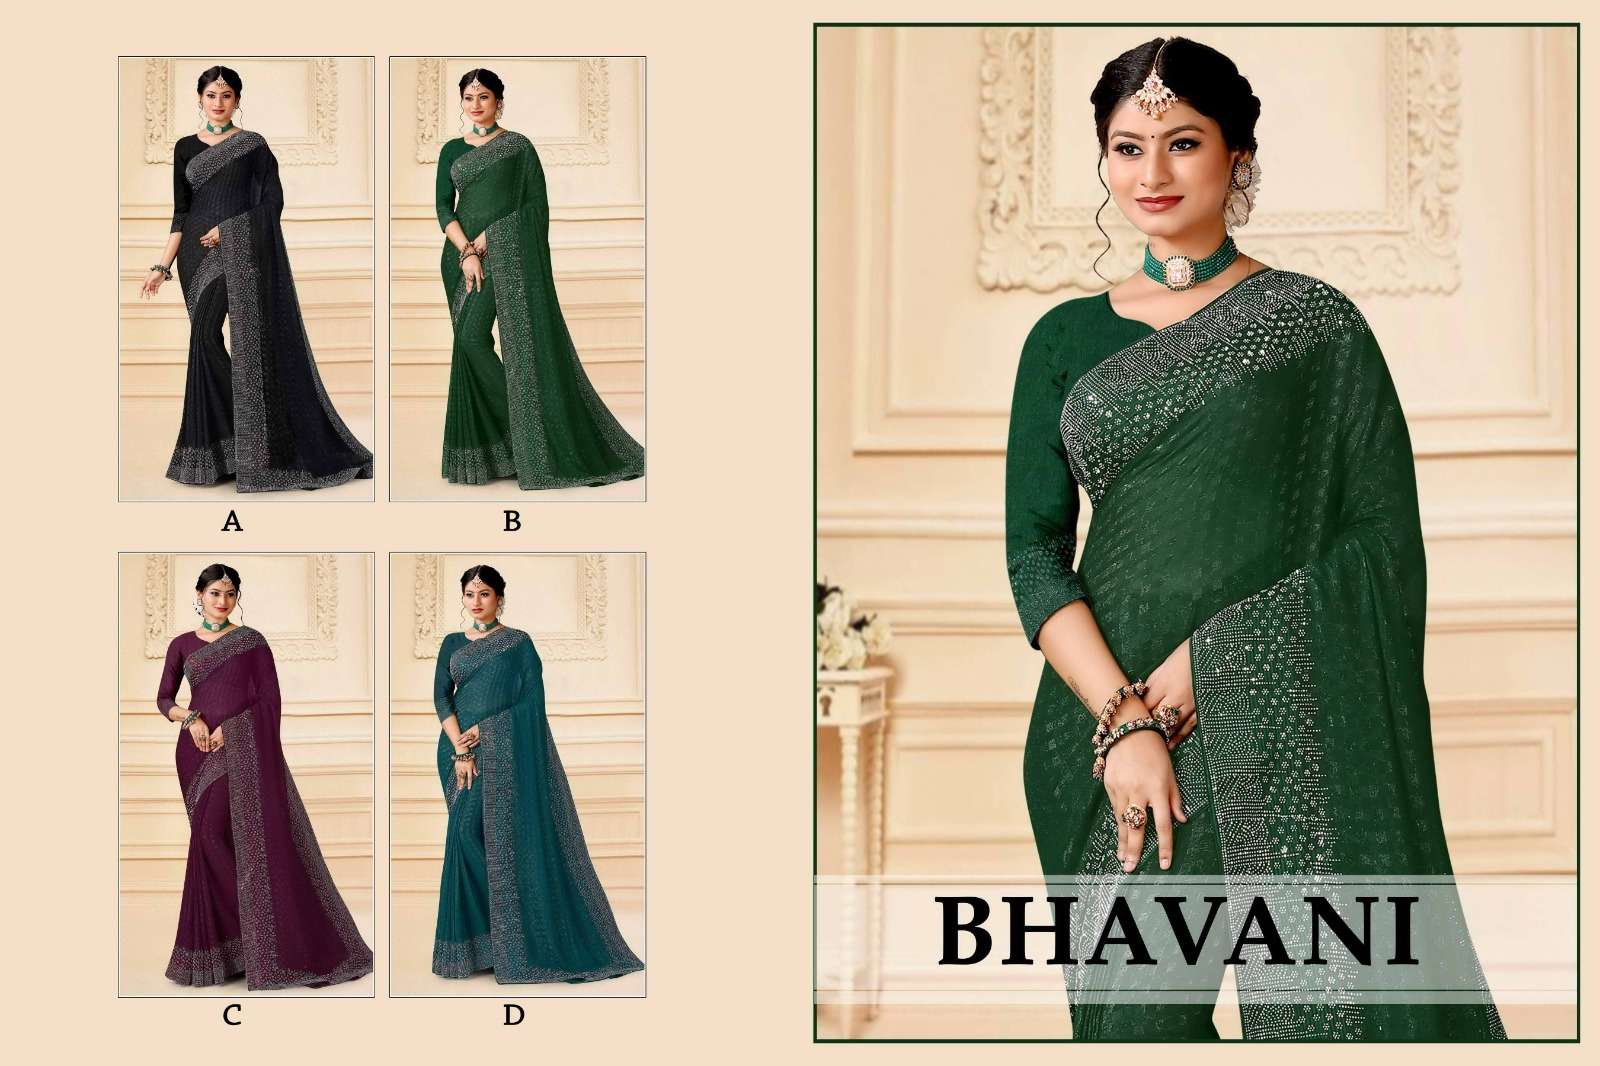 BhavanI by Ranjna saree siroski diamond designer saree online shop